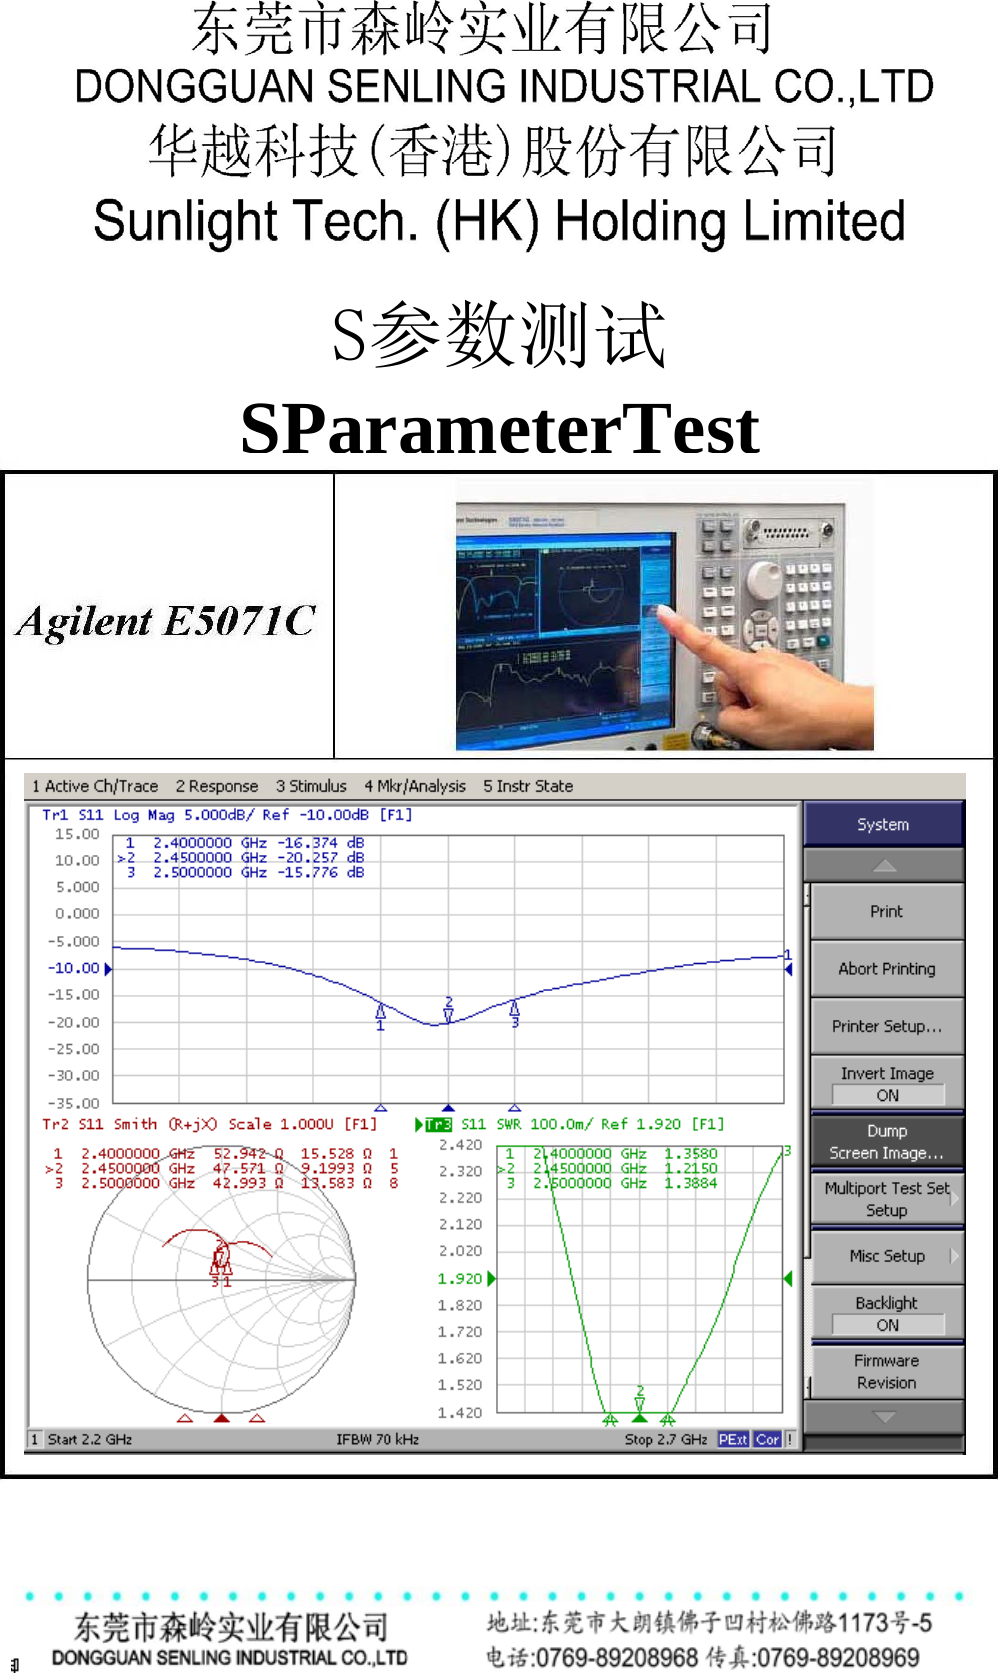      S参数测试 SParameterTest                 